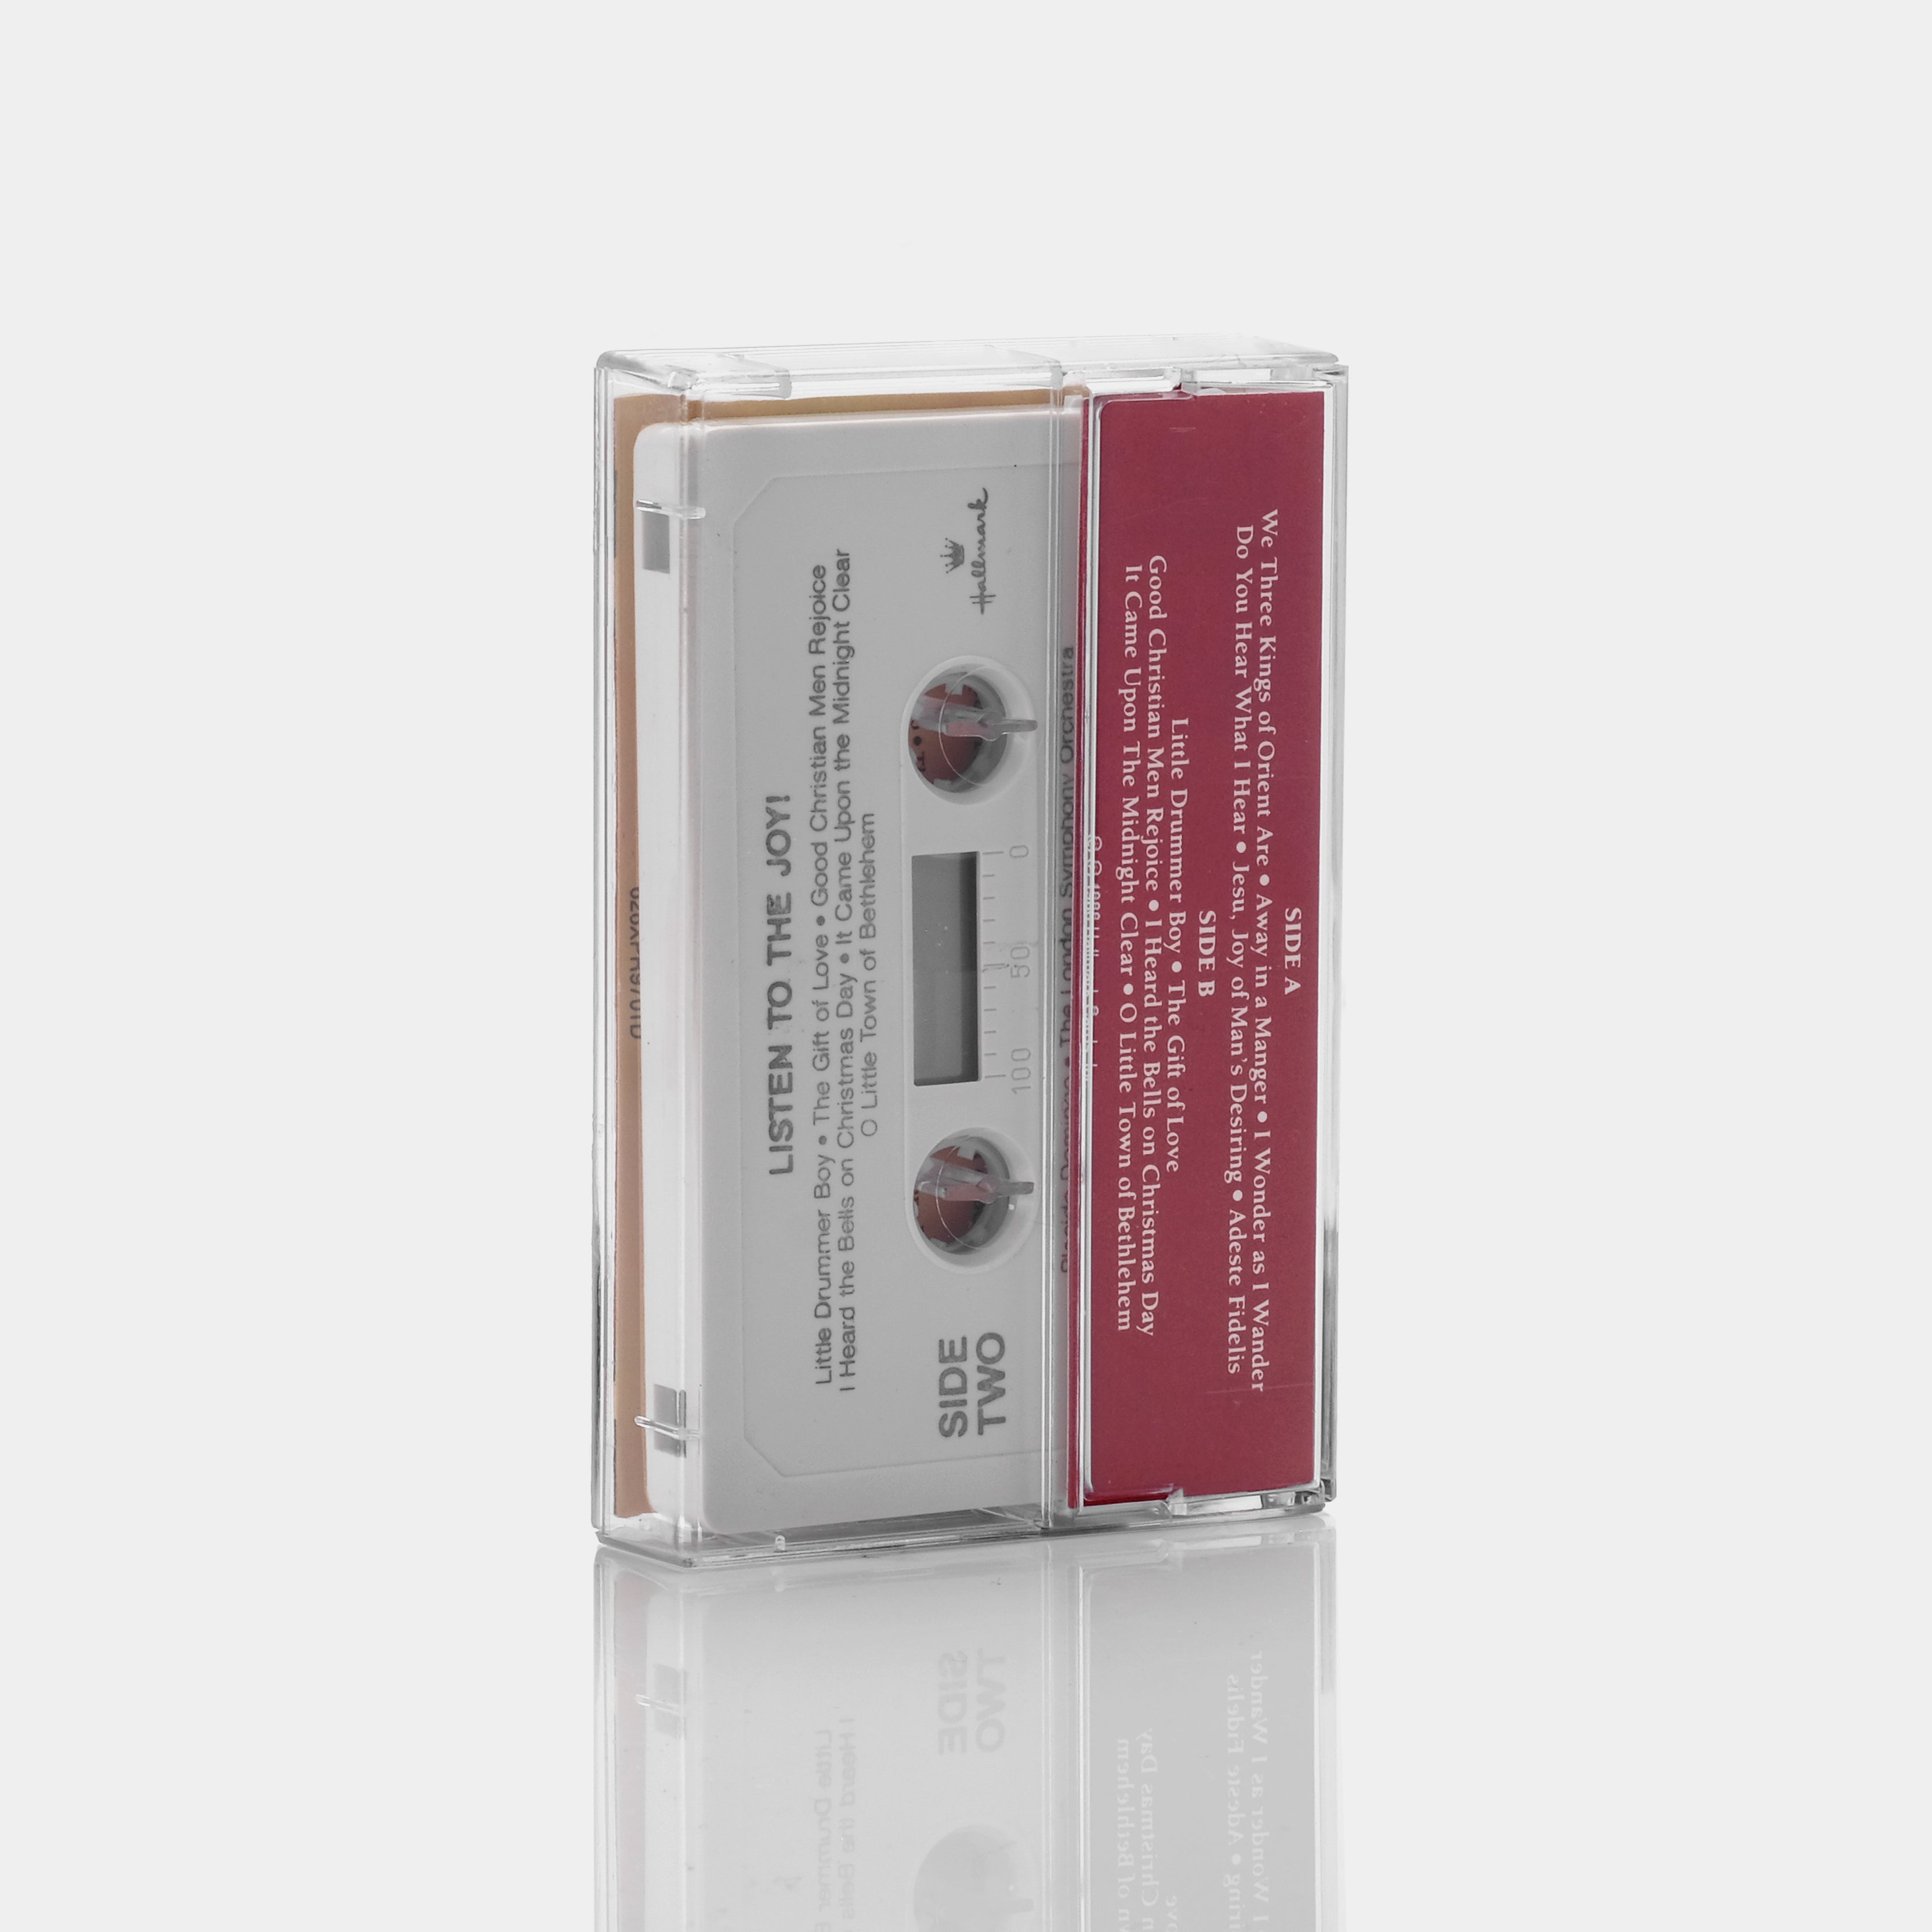 Hallmark Presents: Listen To The Joy! Cassette Tape